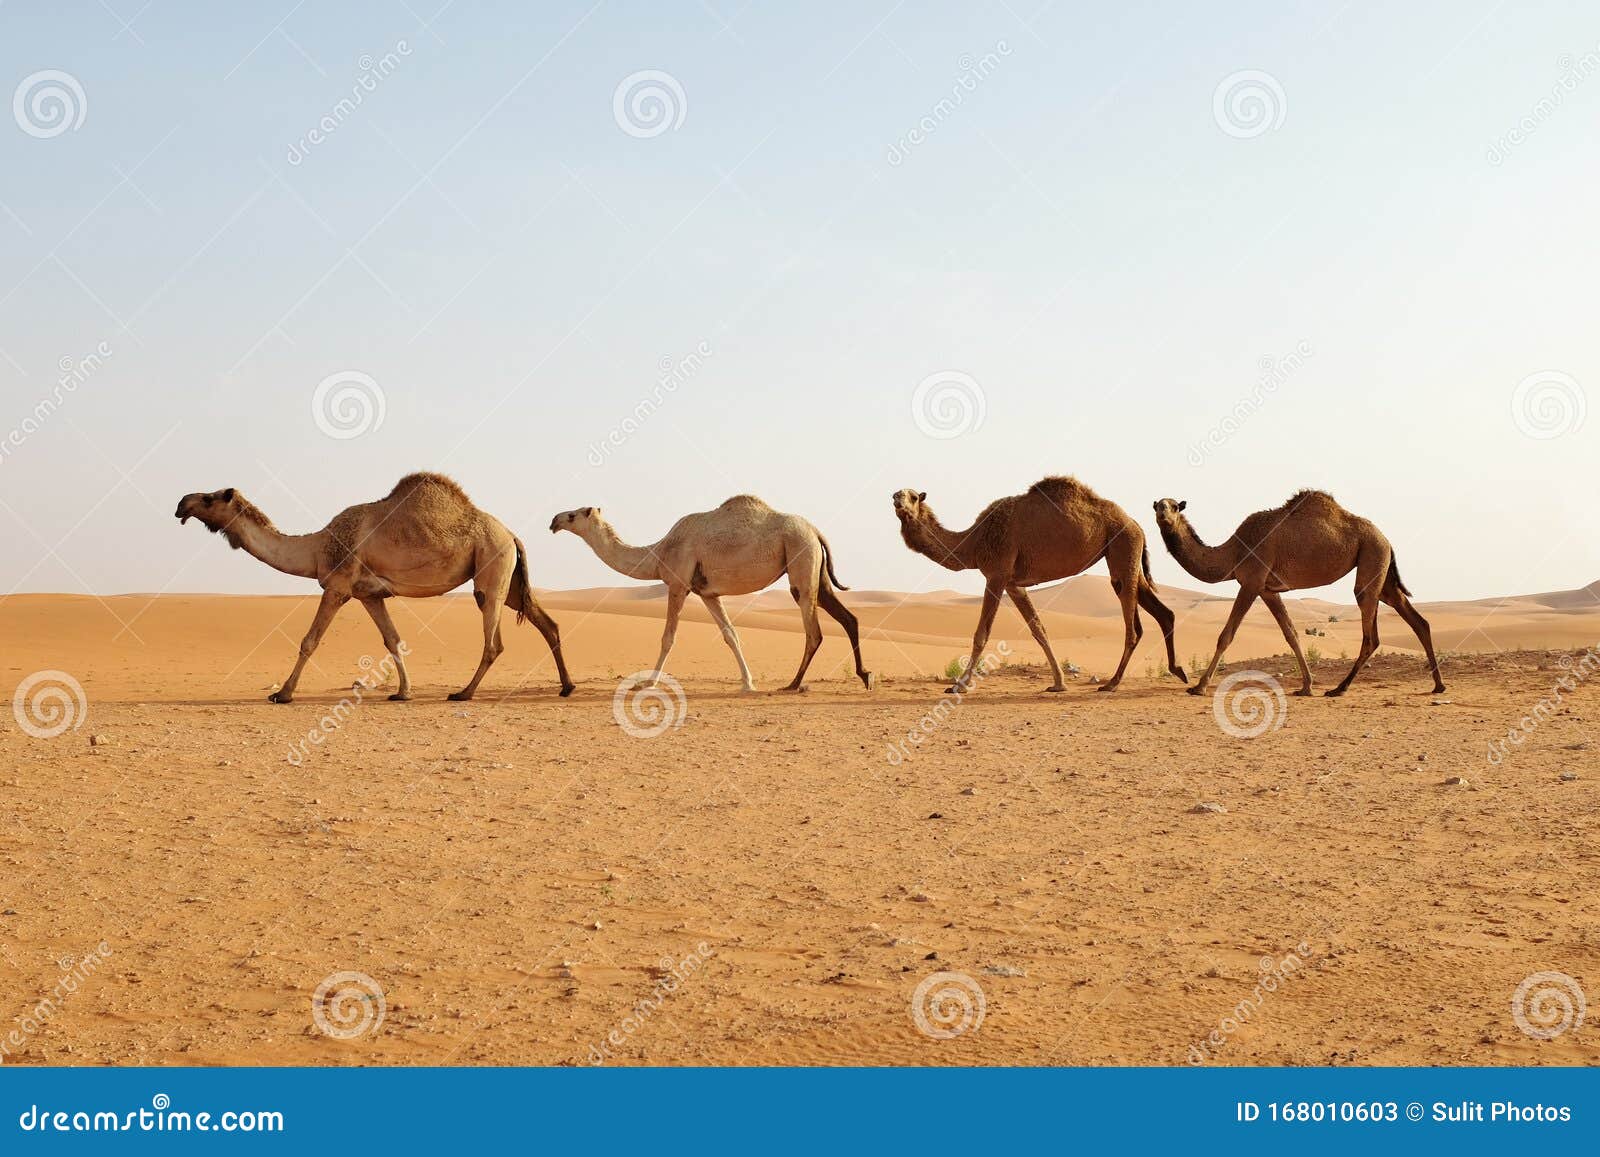 a caravan of arabian camels walking in the desert of riyadh, saudi arabia